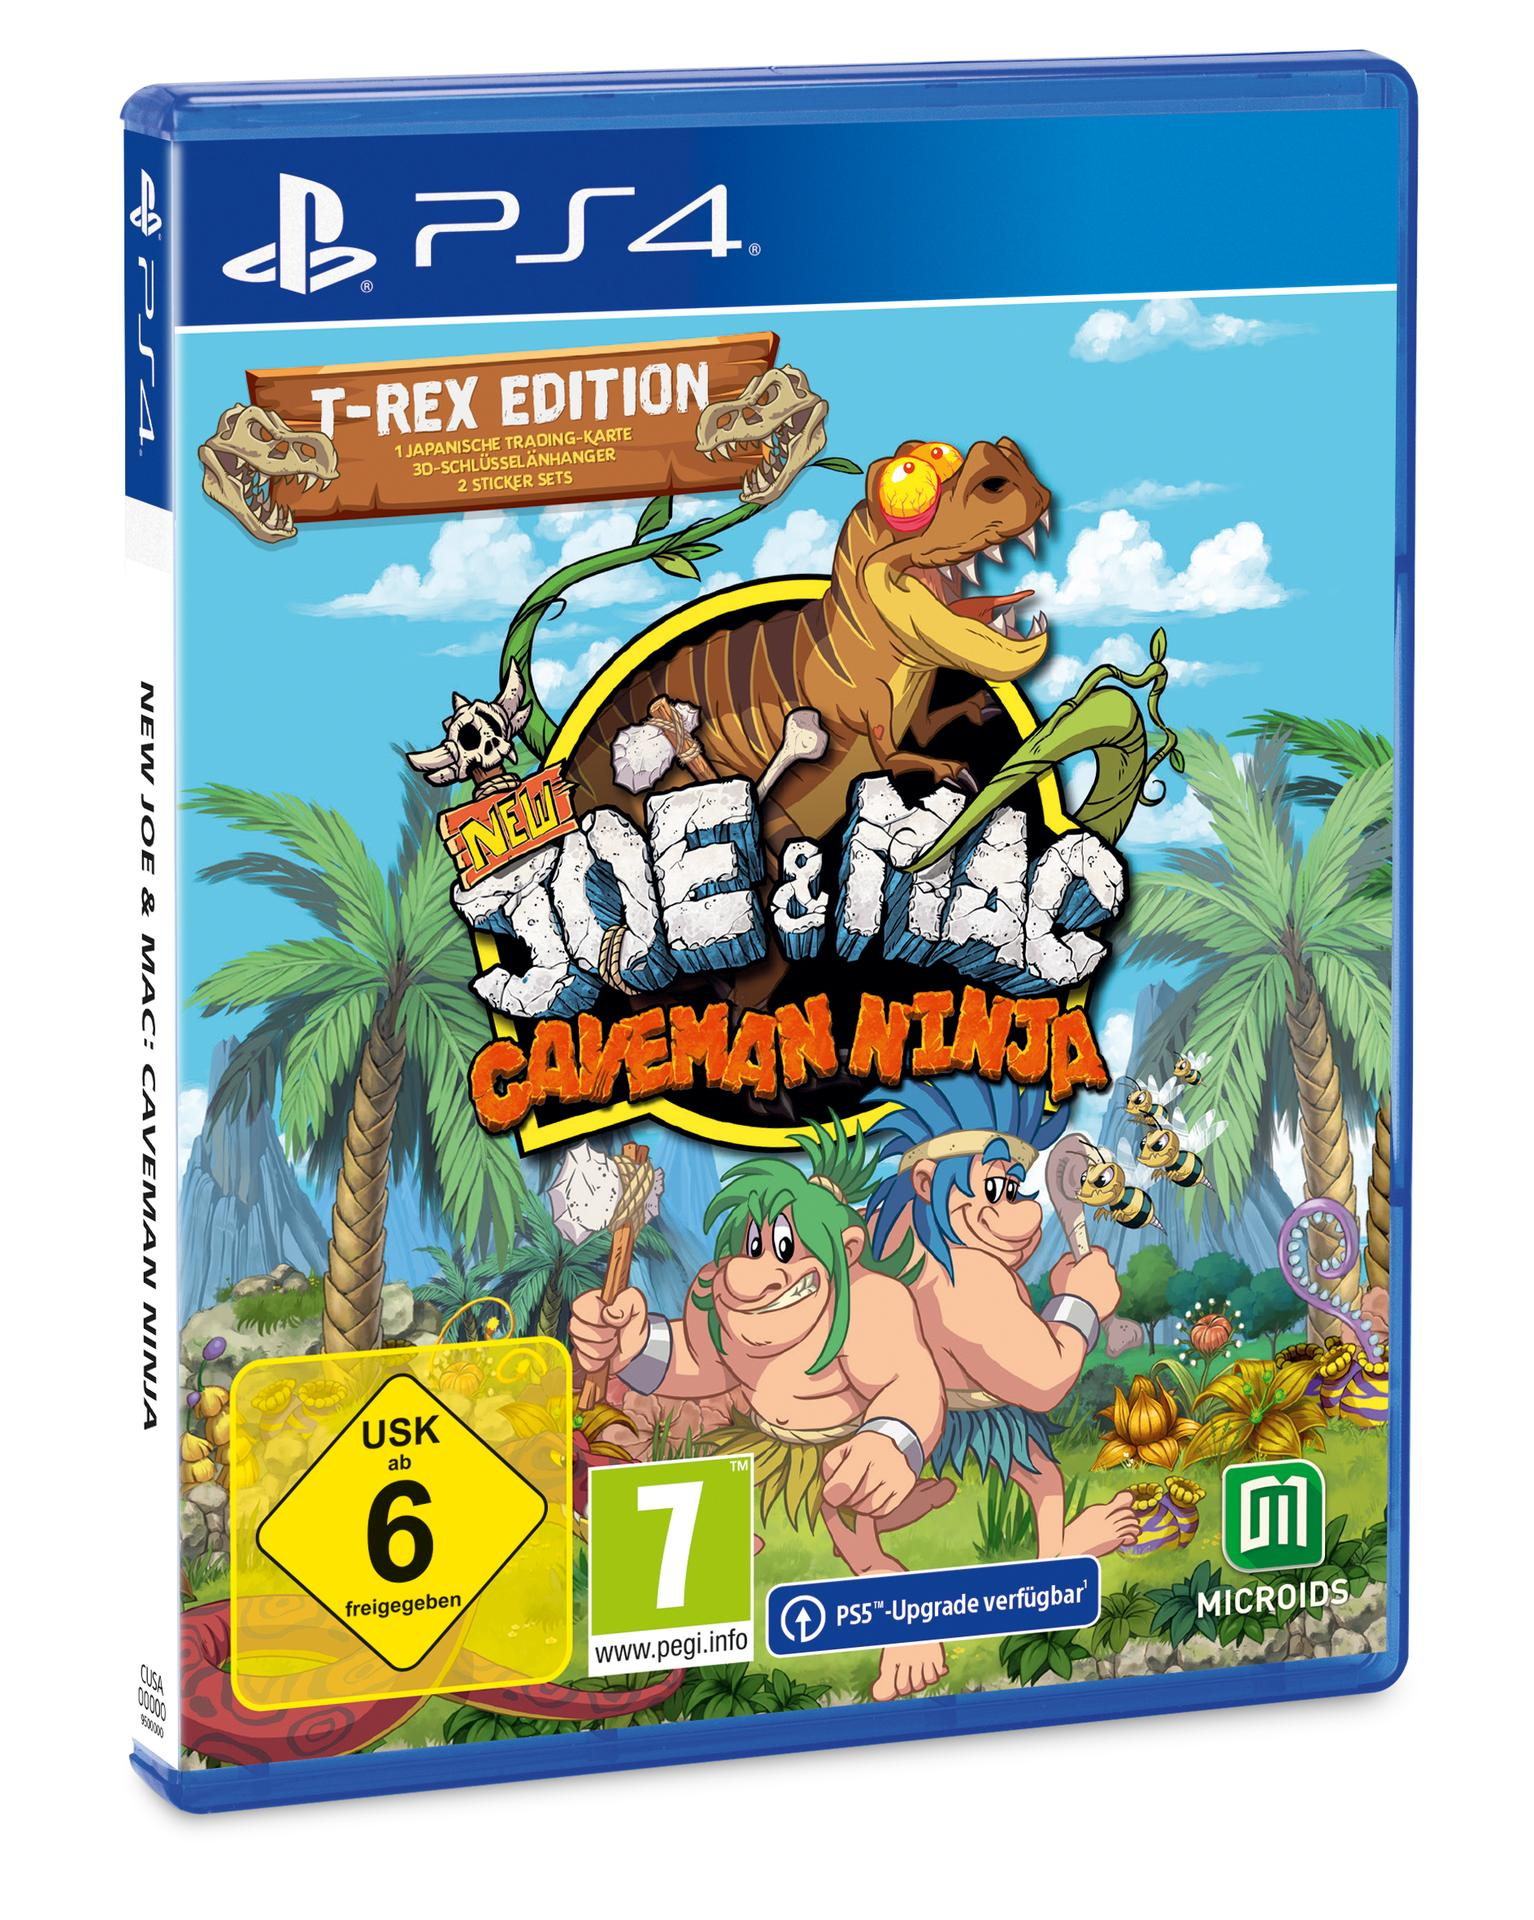 - T-Rex Caveman Edition New [PlayStation 4] Joe Ninja - Mac: &